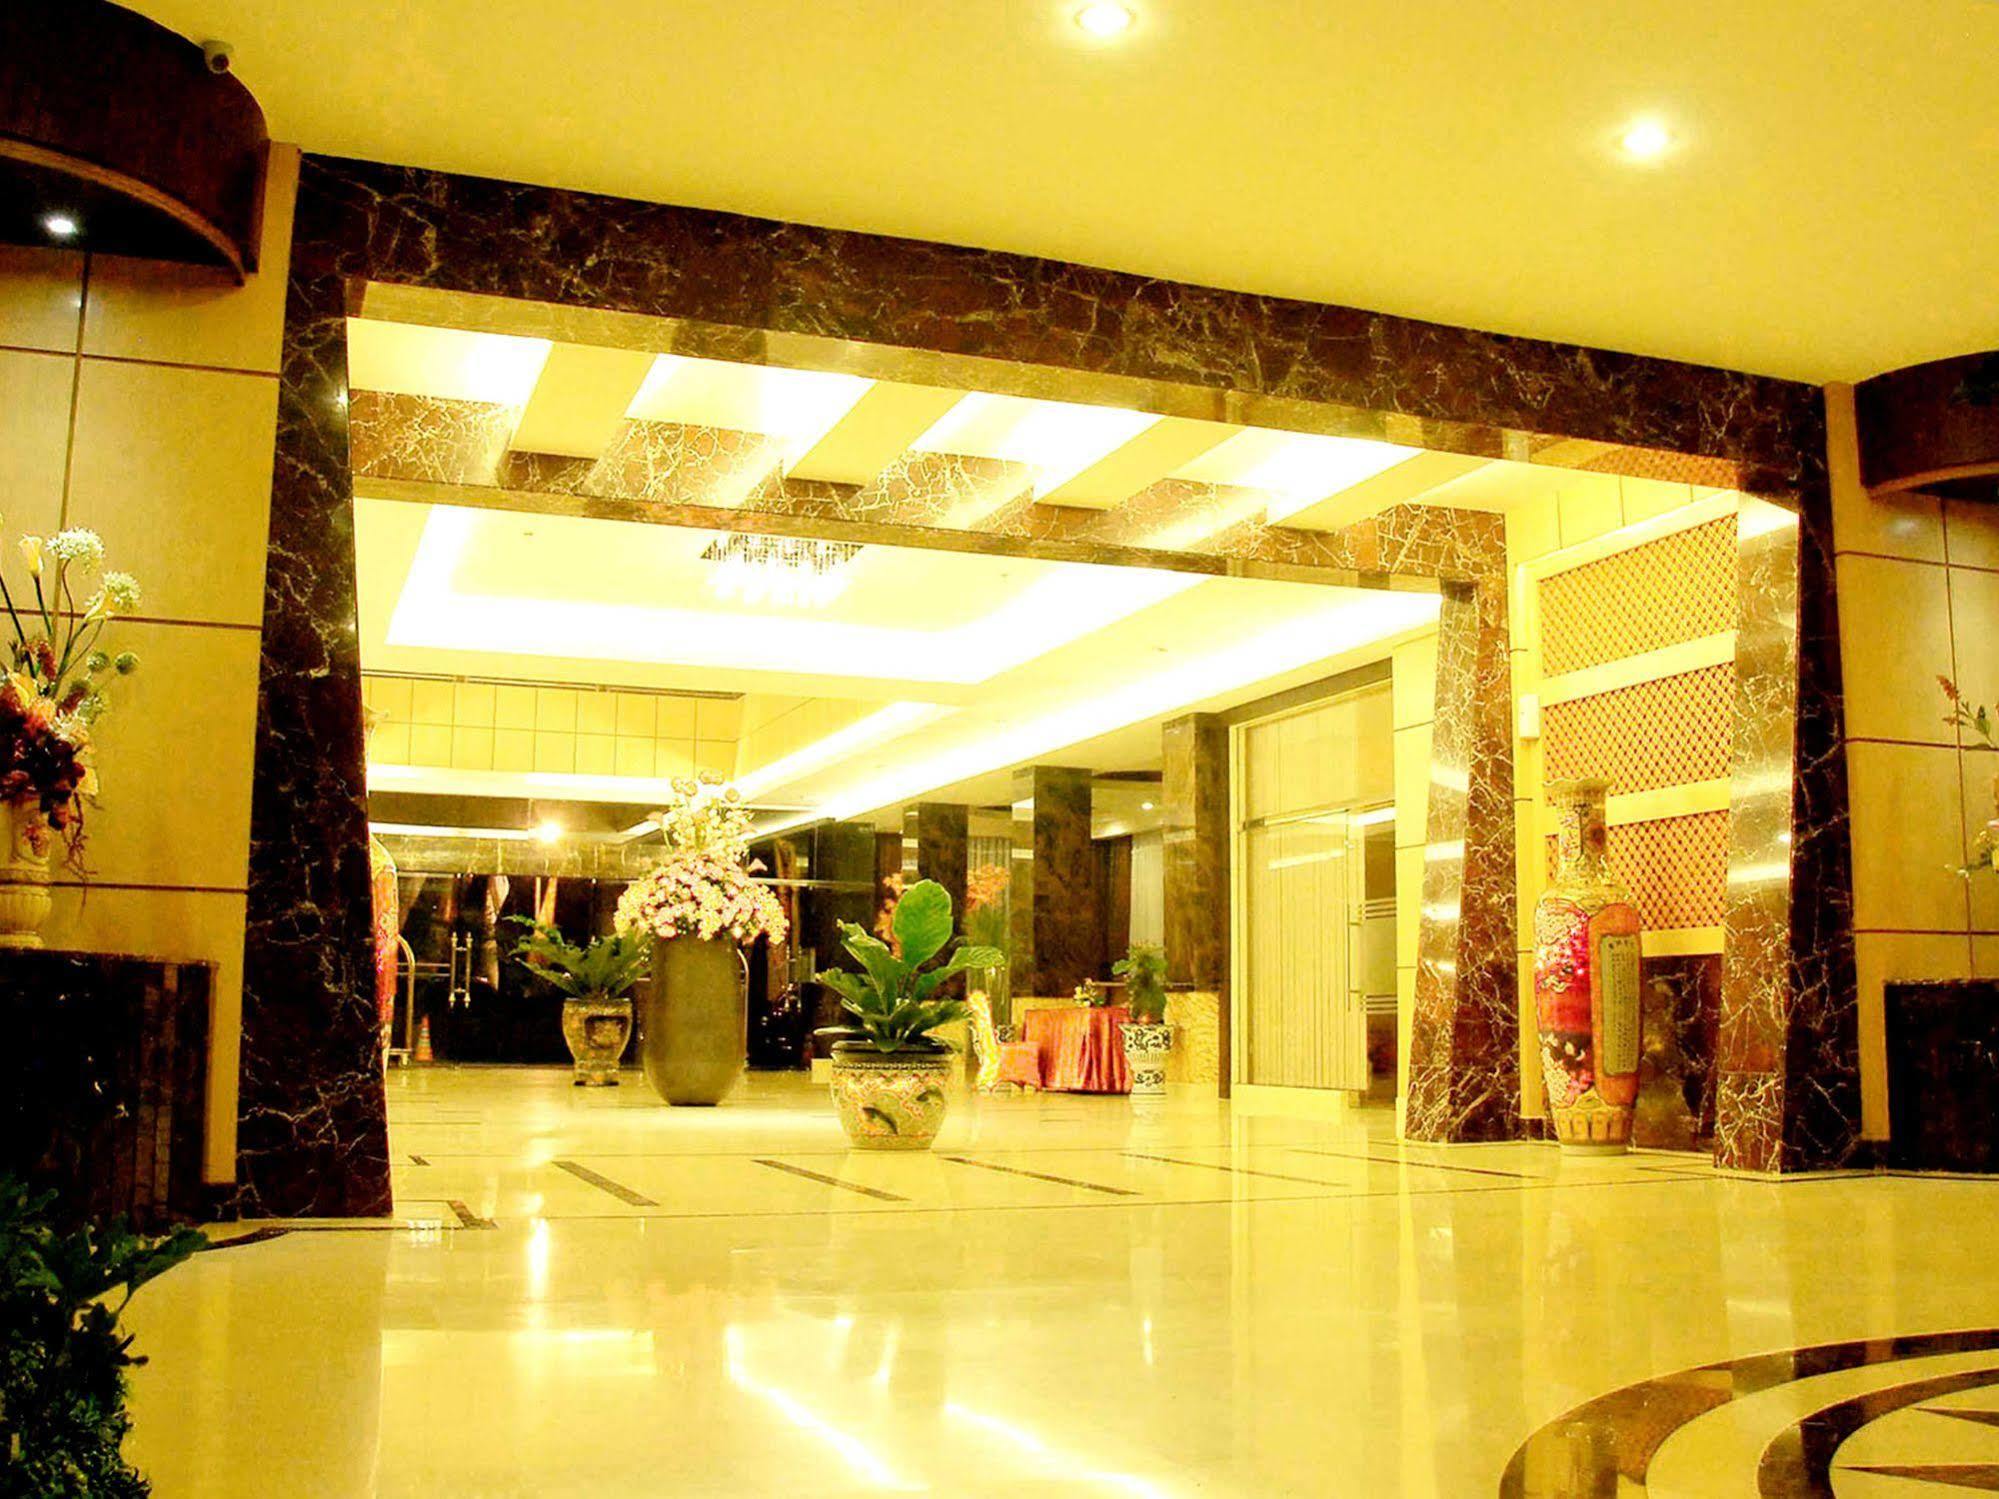 Grand Rocky Hotel Bukittinggi Exterior foto